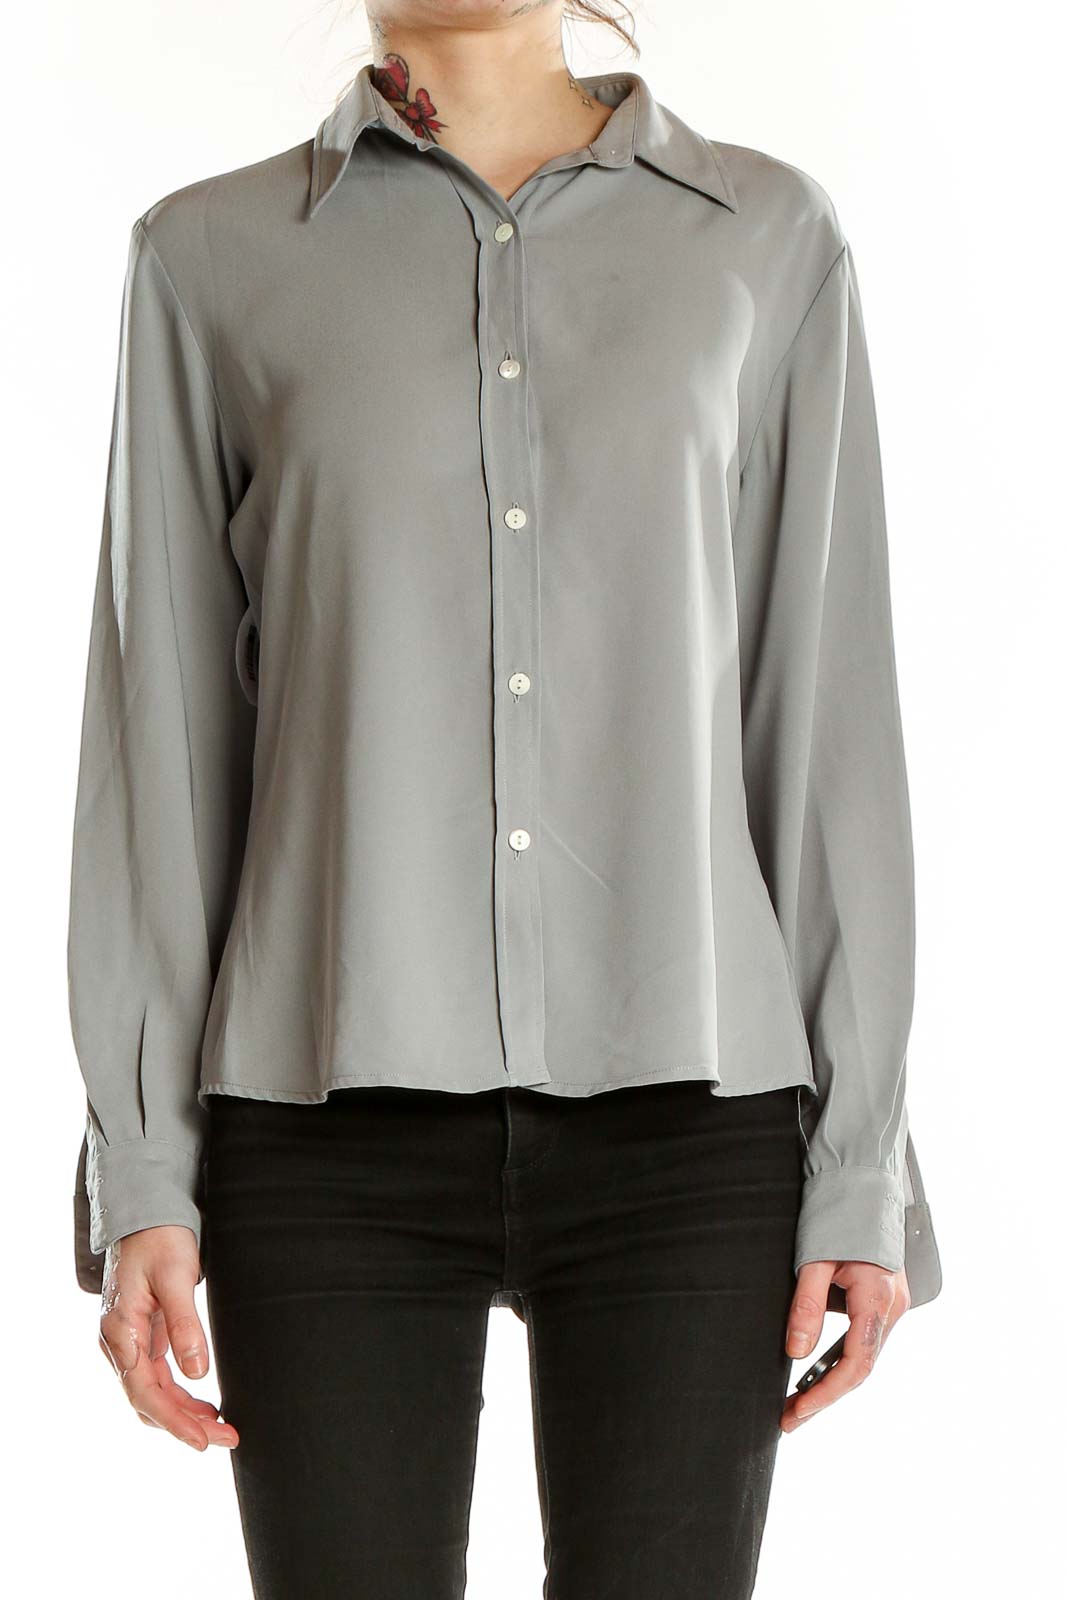 Grey Collared Long Sleeve Shirt Front